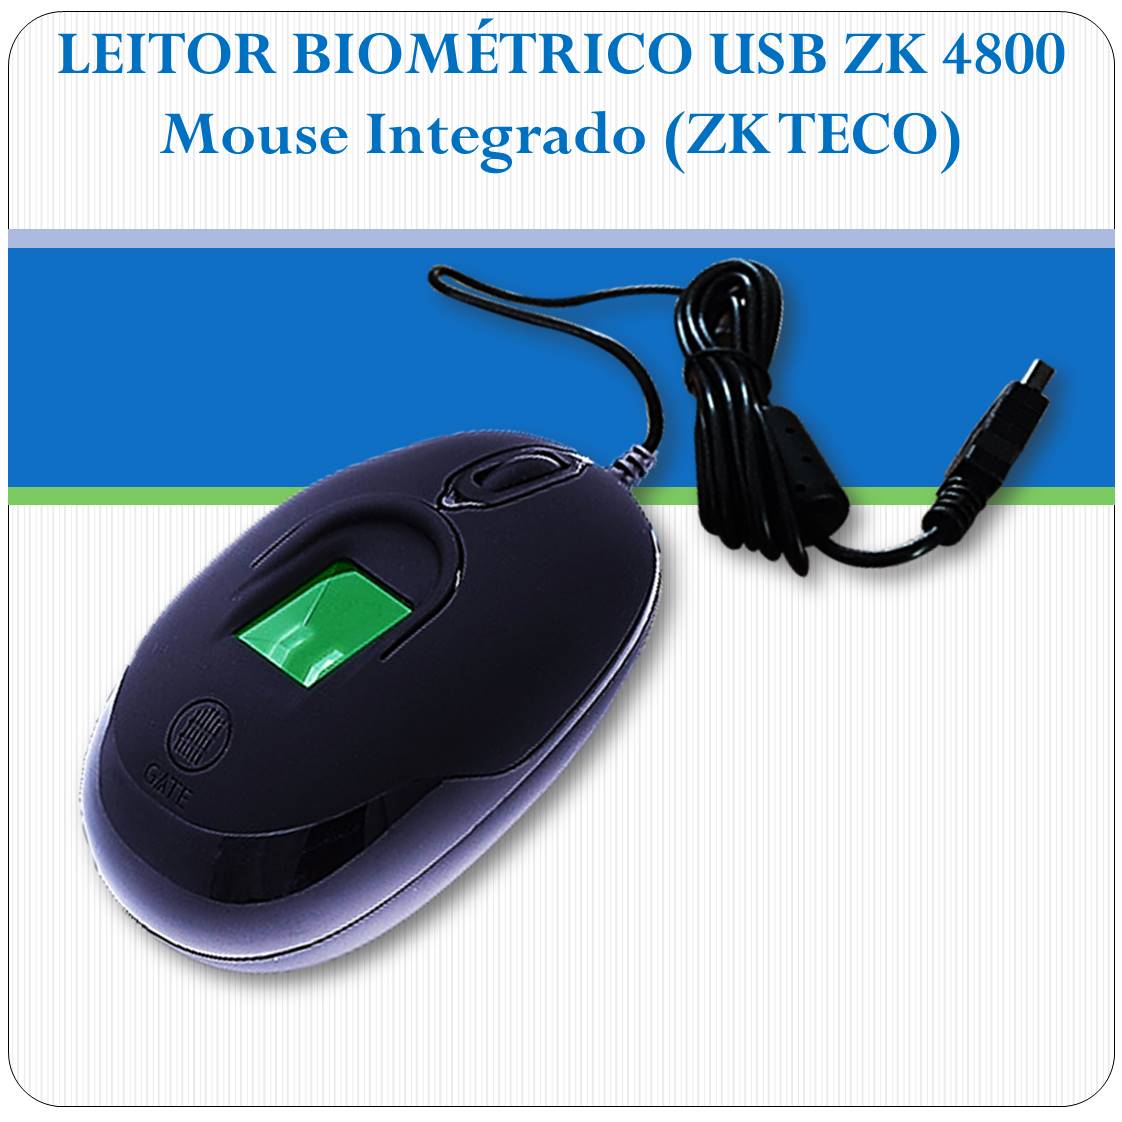 Leitor Biométrico e Mouse USB - U4800 32bits/64bits 